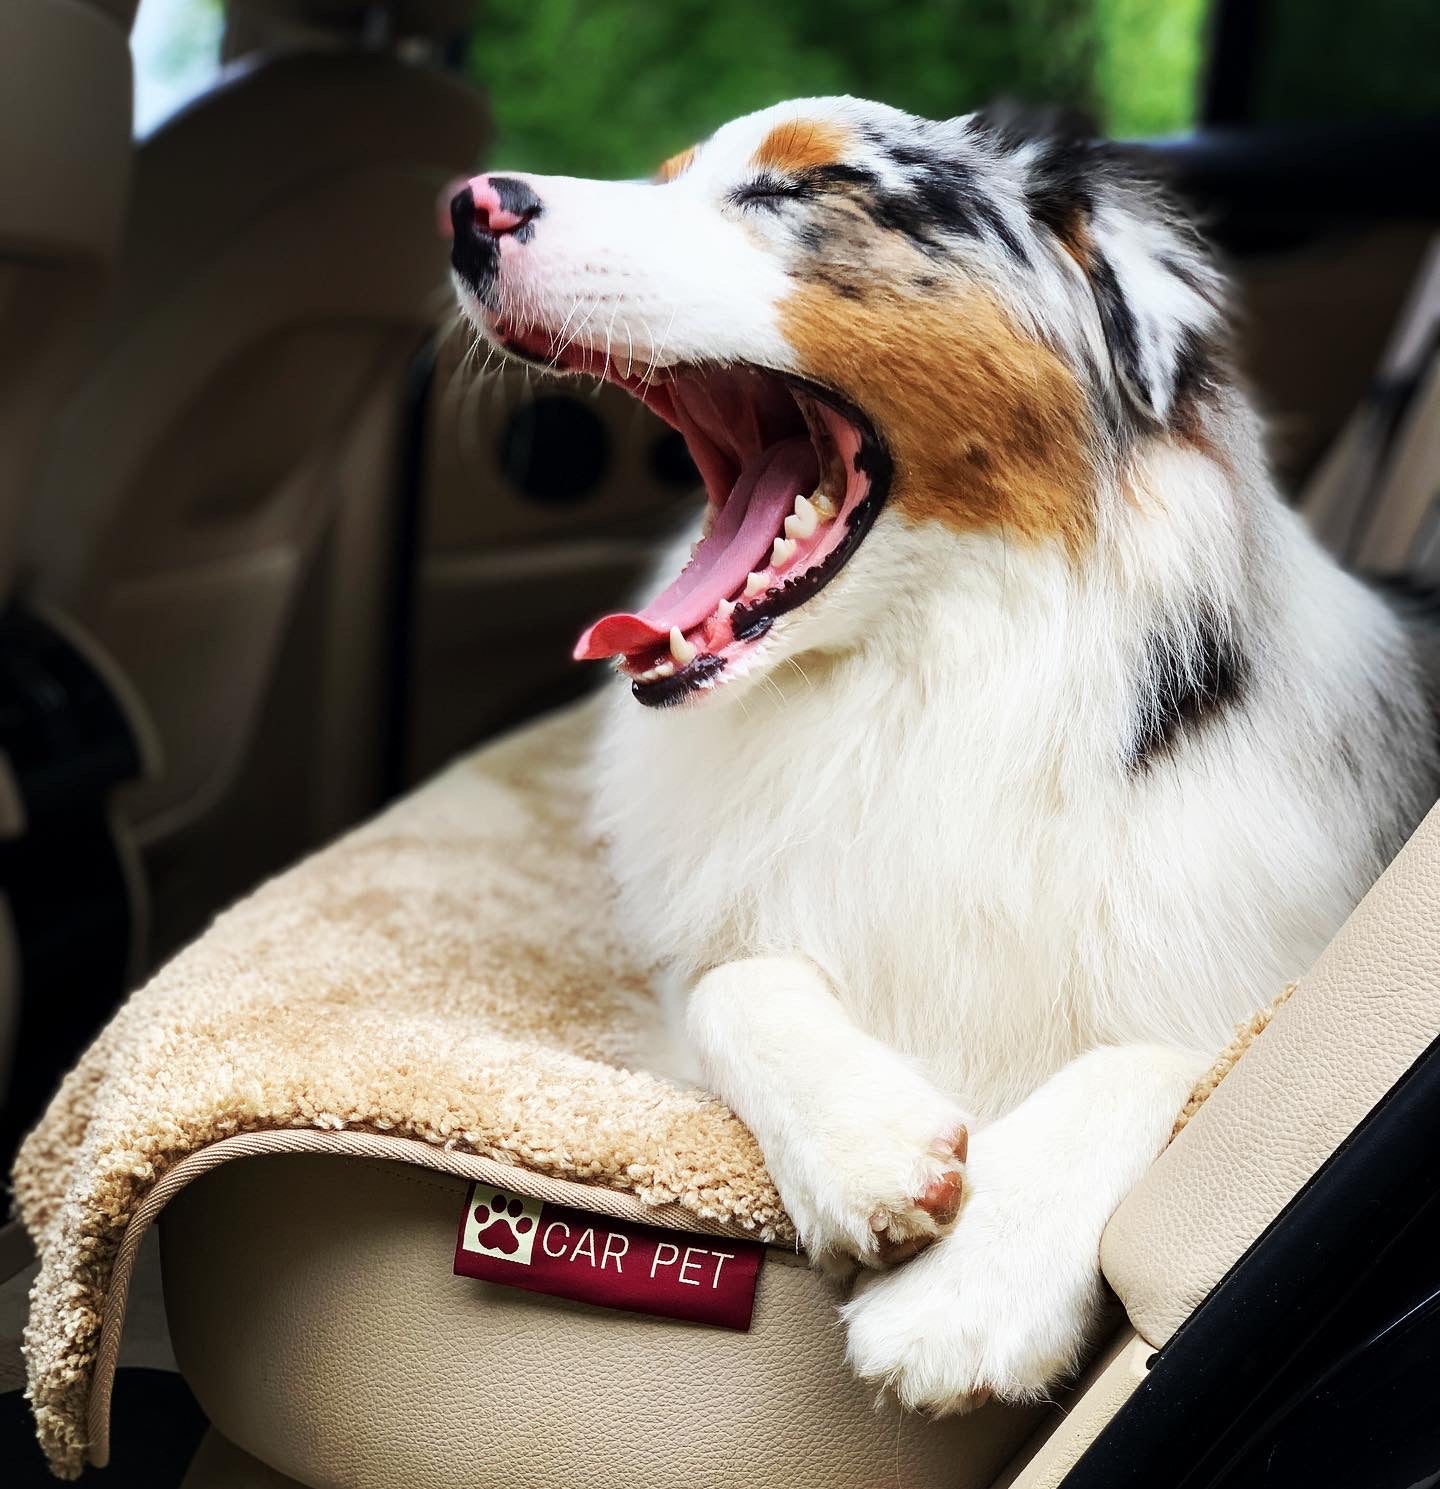 Pet Seat Cover - Car Pet (Beige)